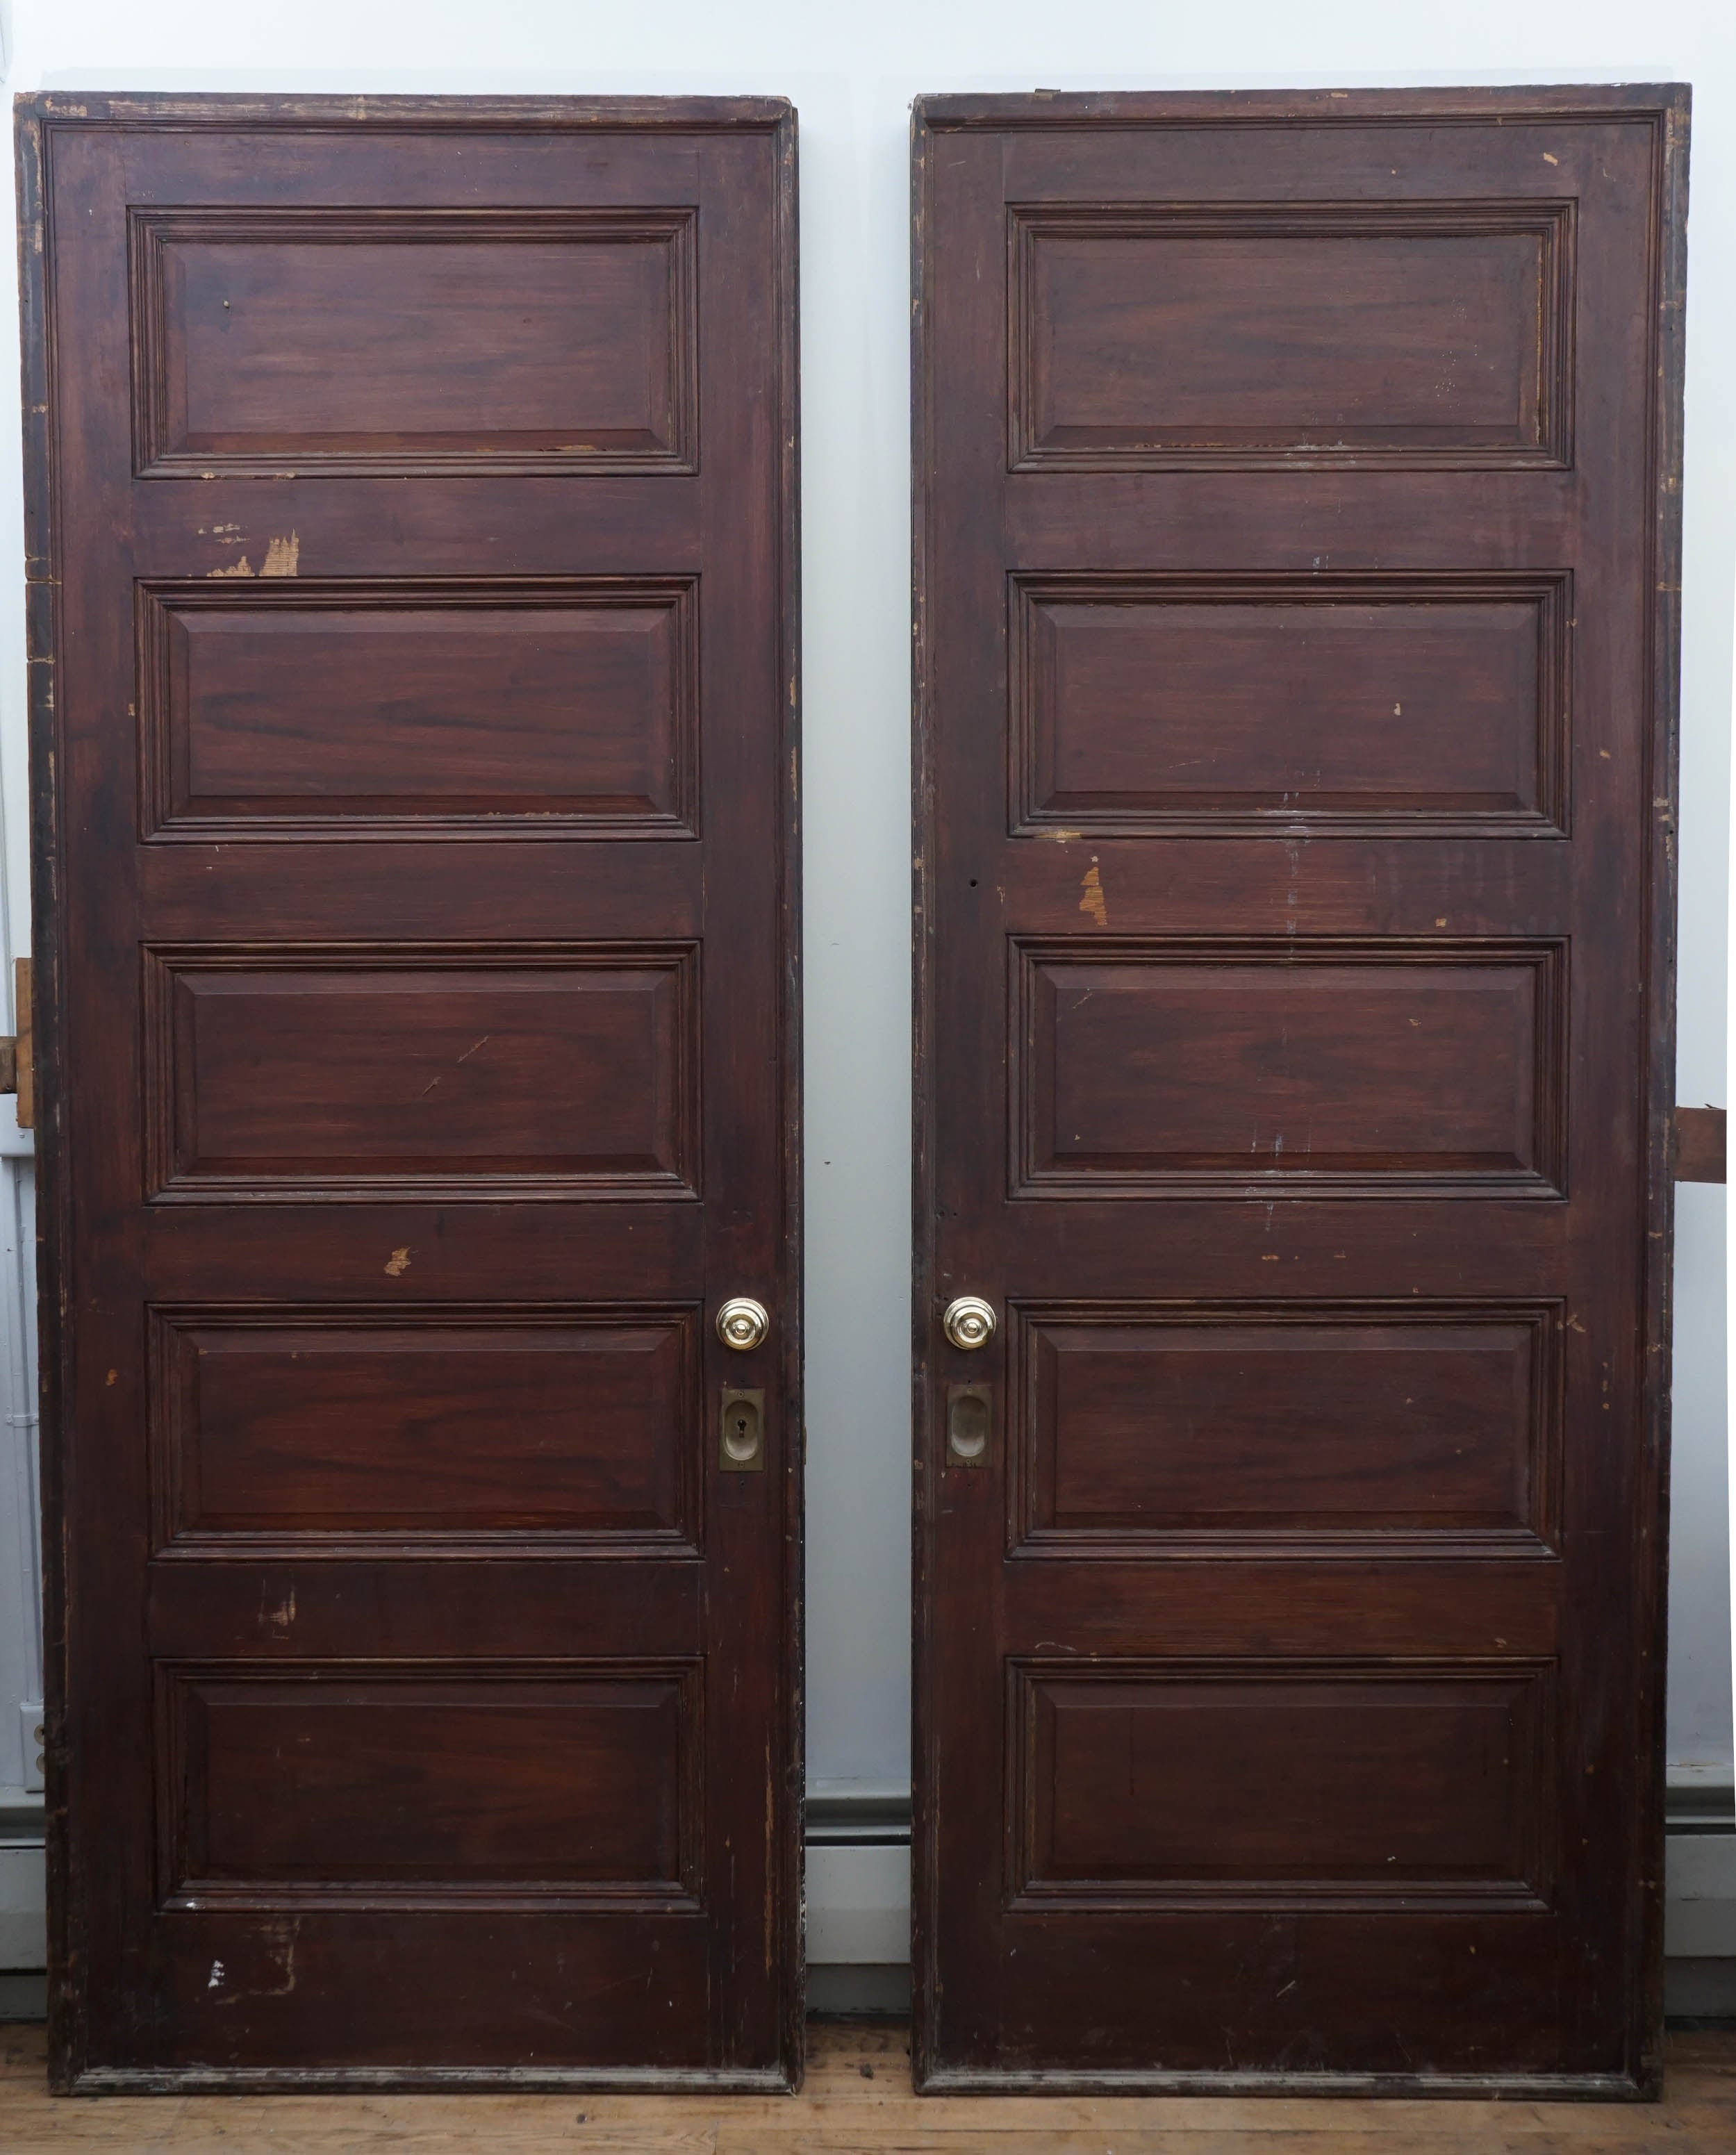 Pair of 19th century doors.